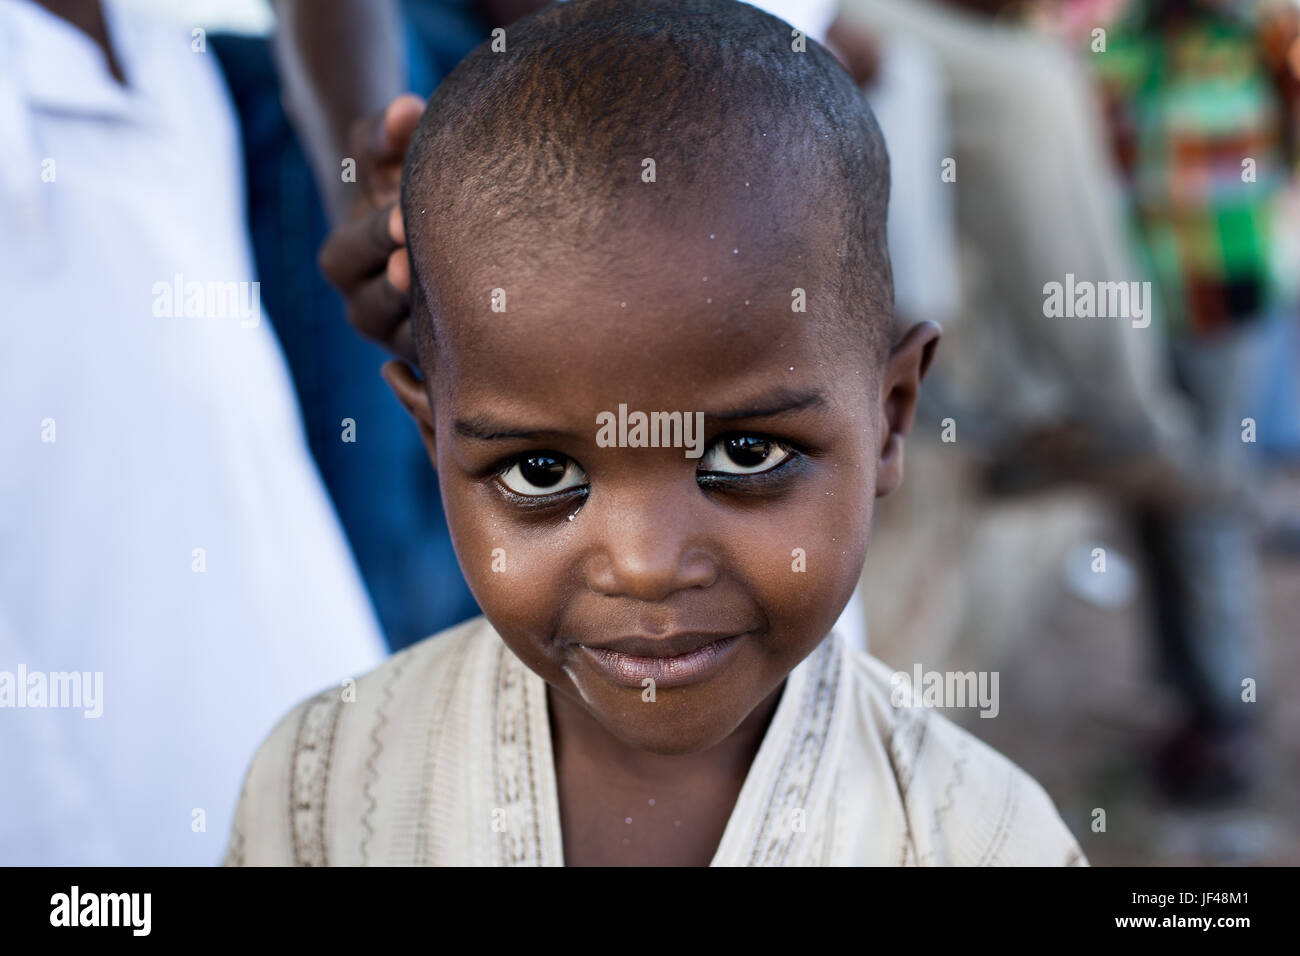 Portrait of a young Swahili child with kohl on her eyes, Lamu, Kenya Stock Photo